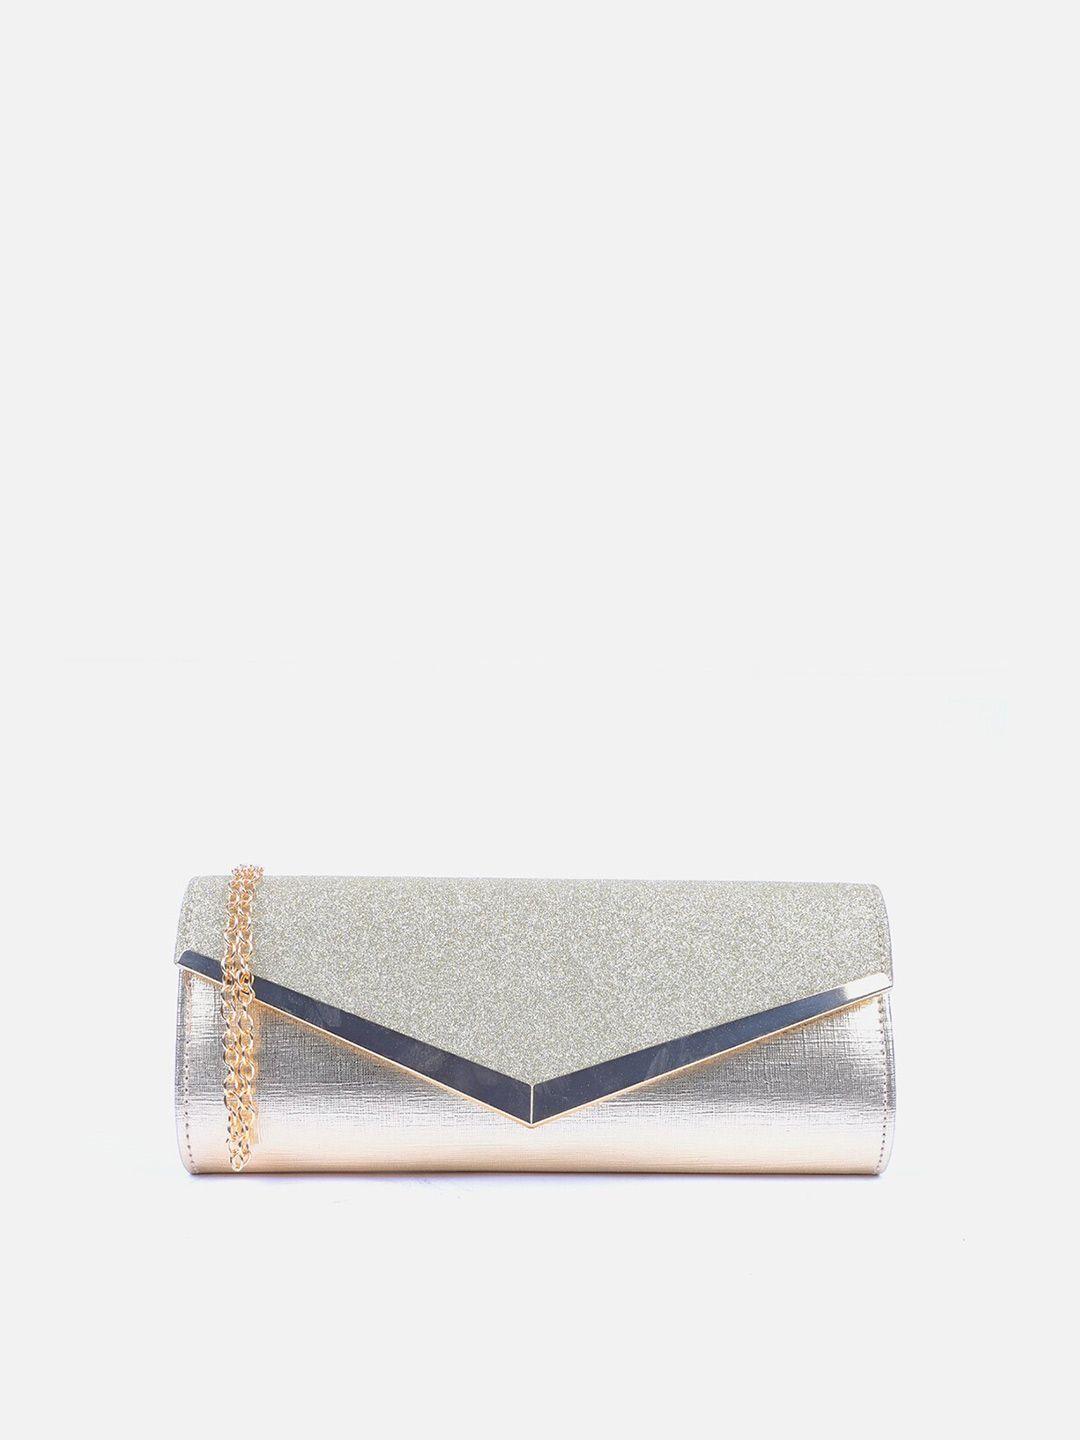 carlton london embellished purse clutch with shoulder strap